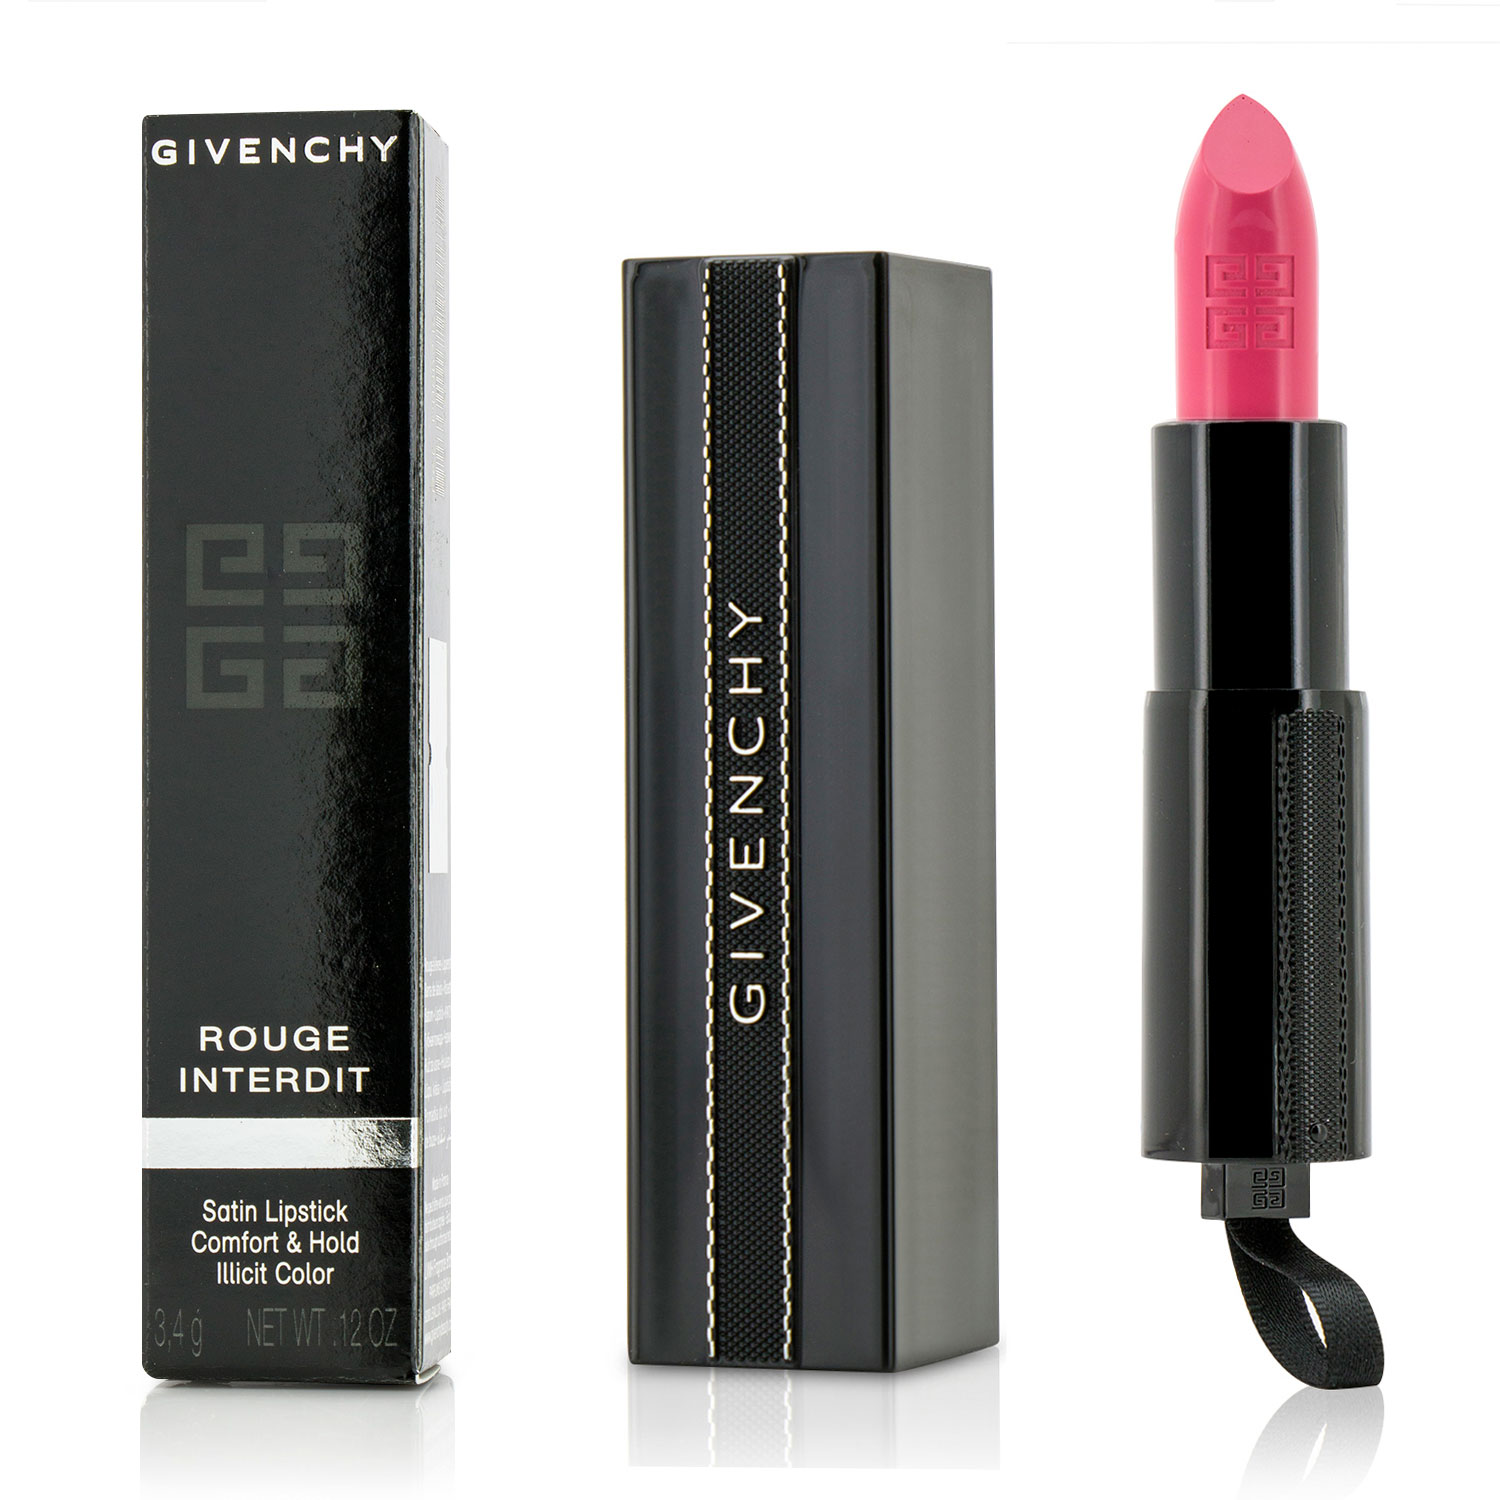 Rouge Interdit Satin Lipstick - # 21 Rose Neon Givenchy Image